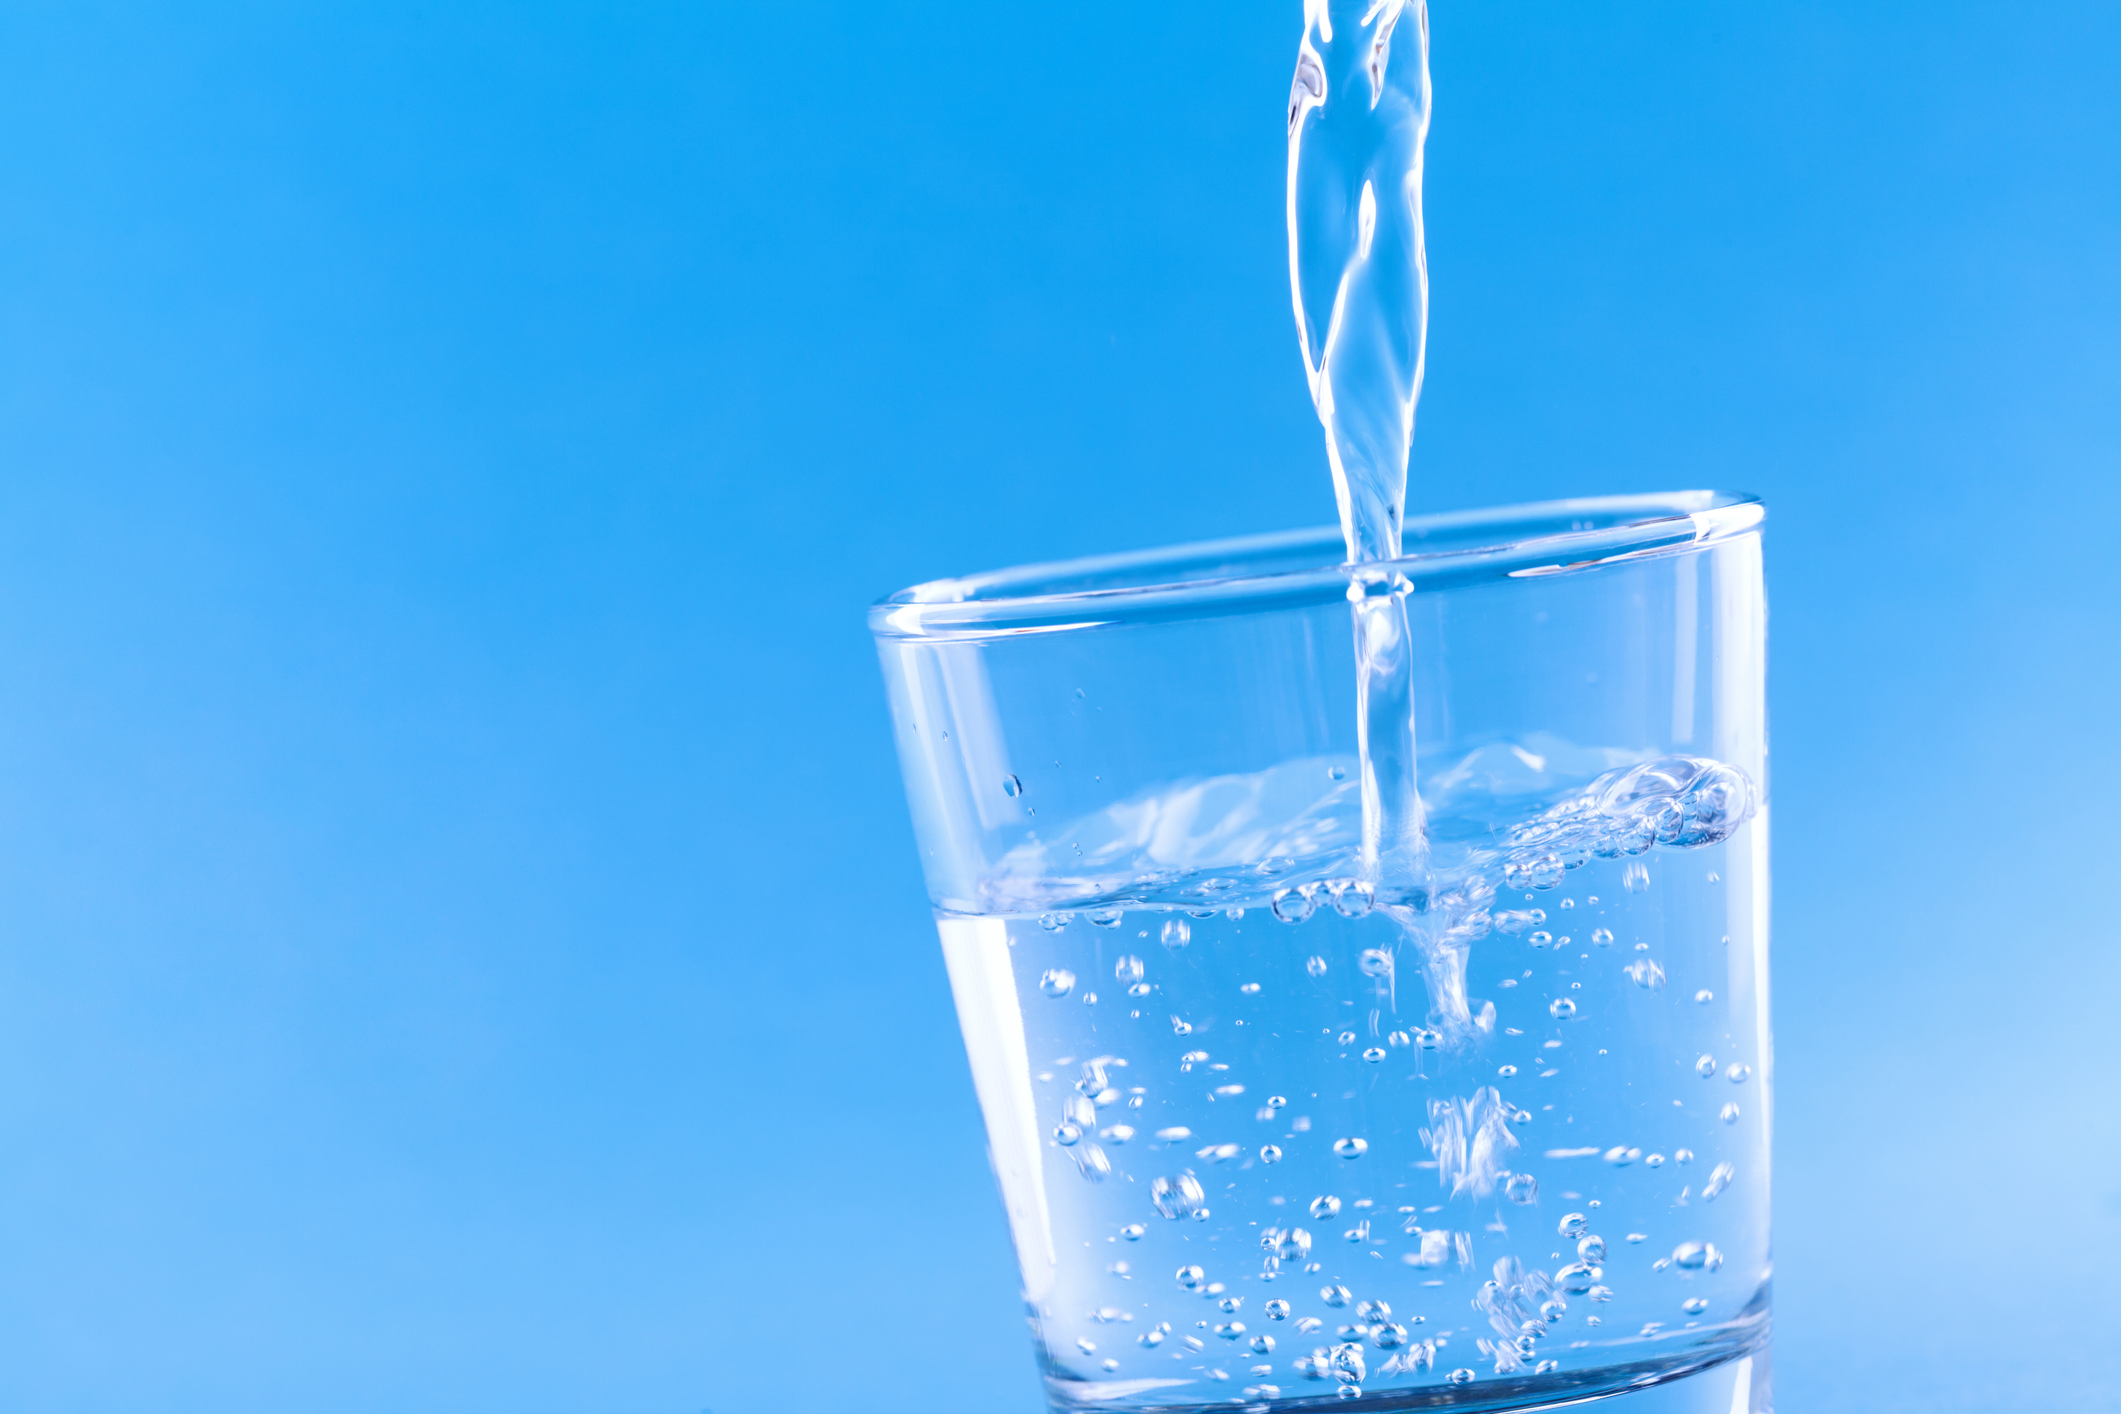 PFAS water regulations